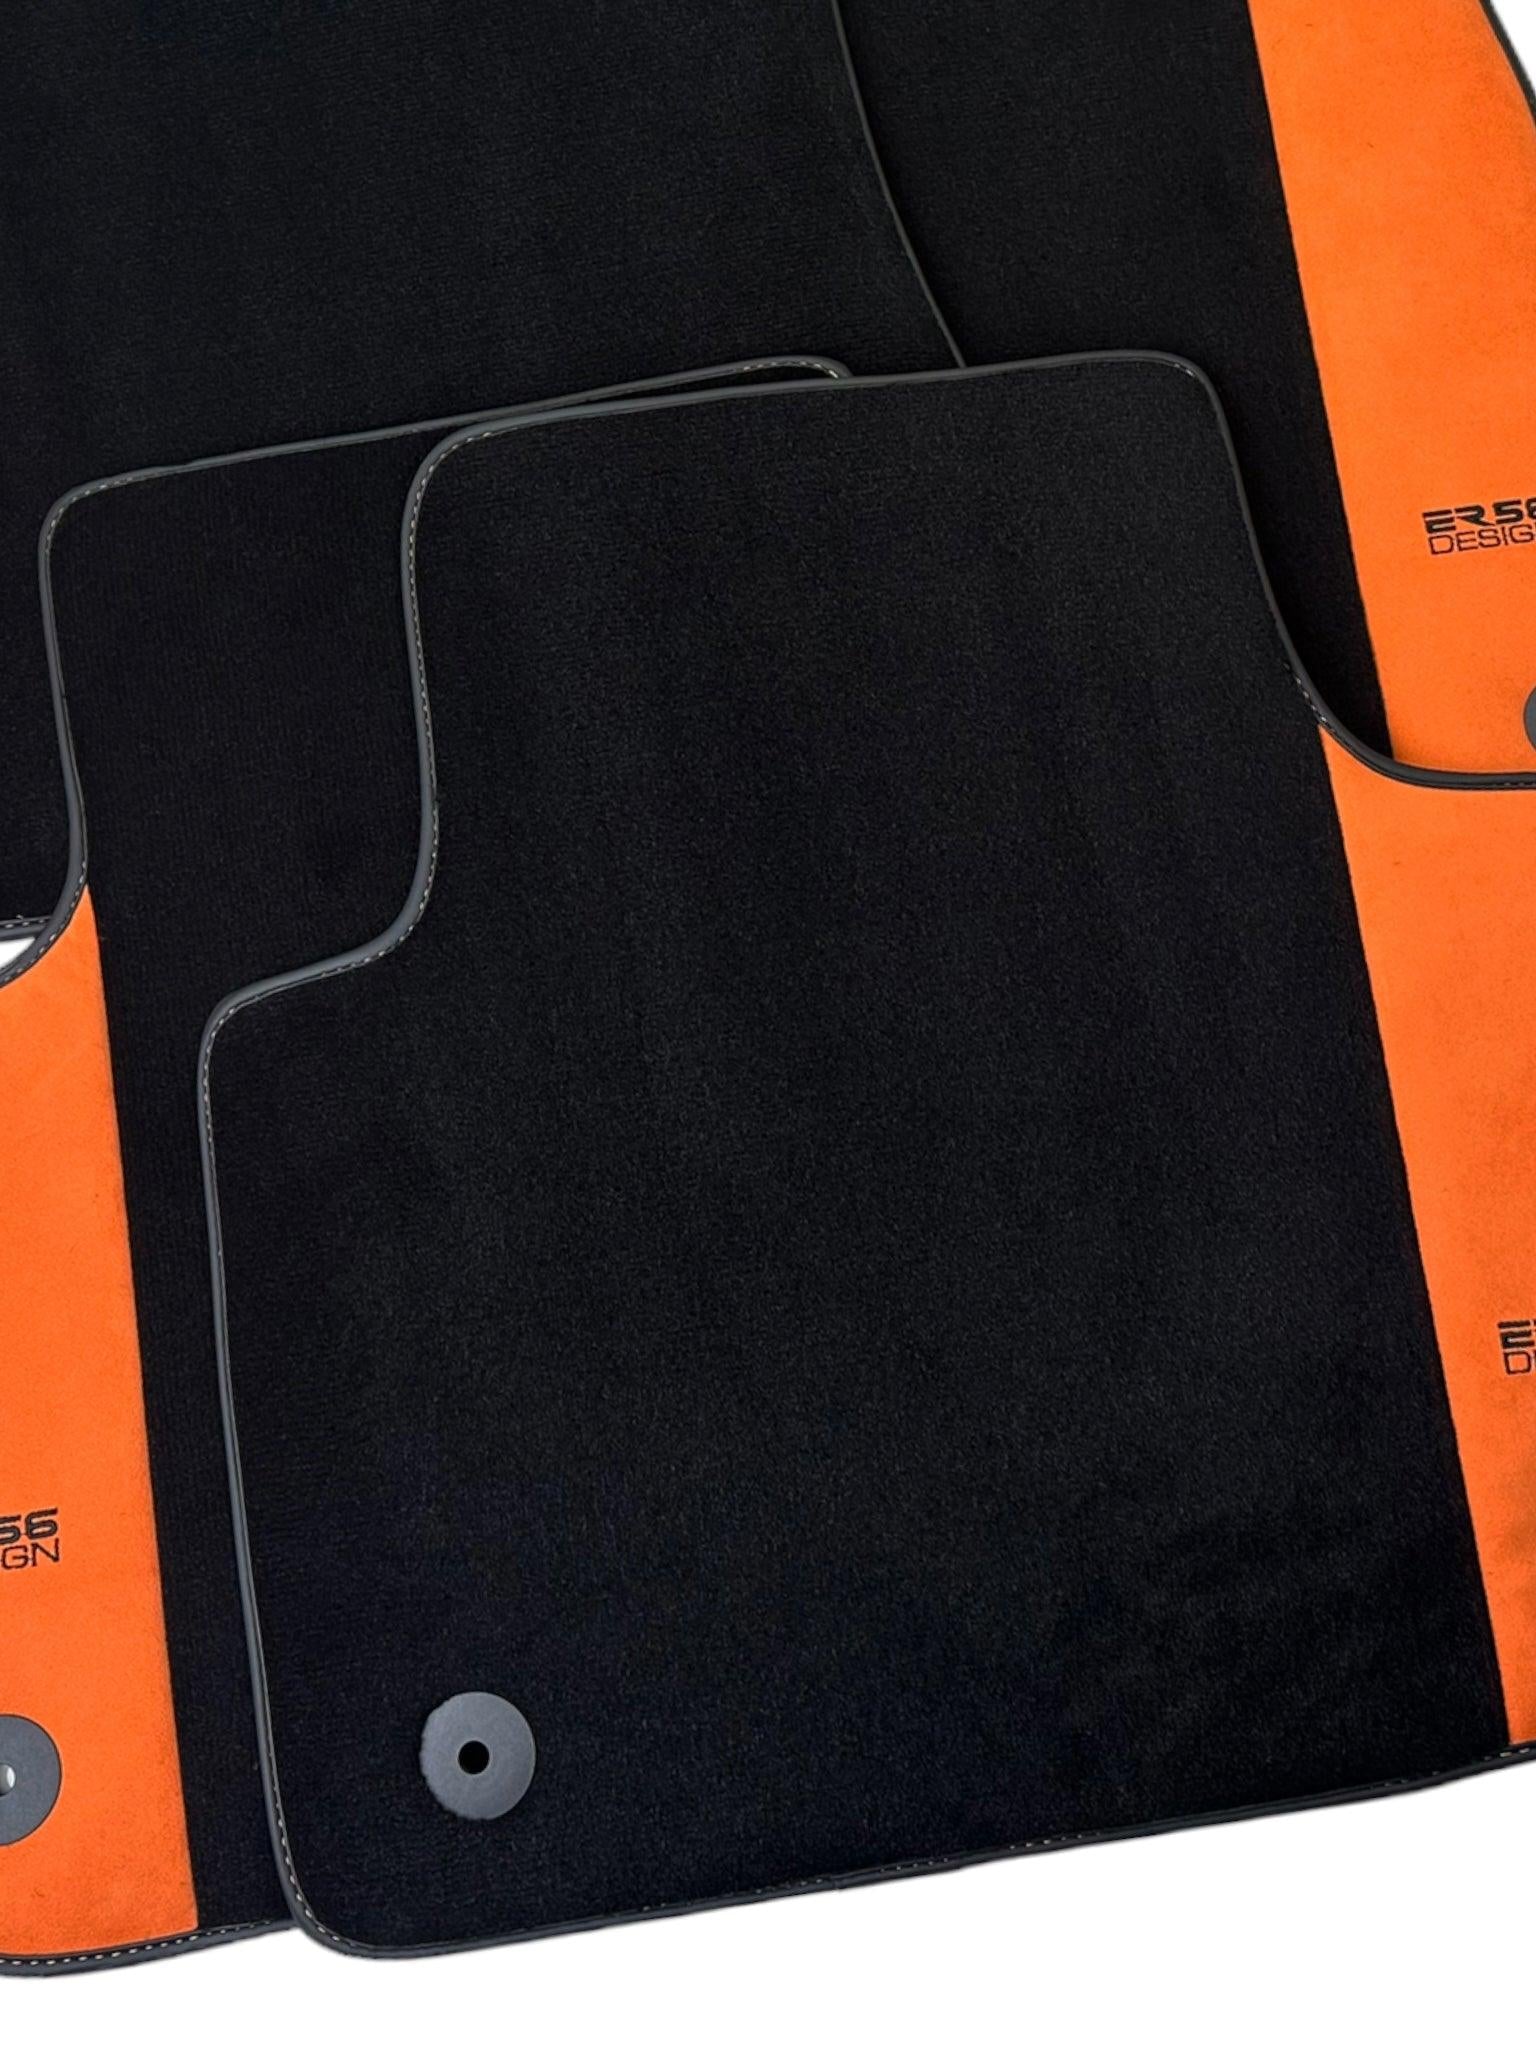 Black Floor Mats for Audi A5 - F57 Convertible (2020-2023) Orange Alcantara | ER56 Design